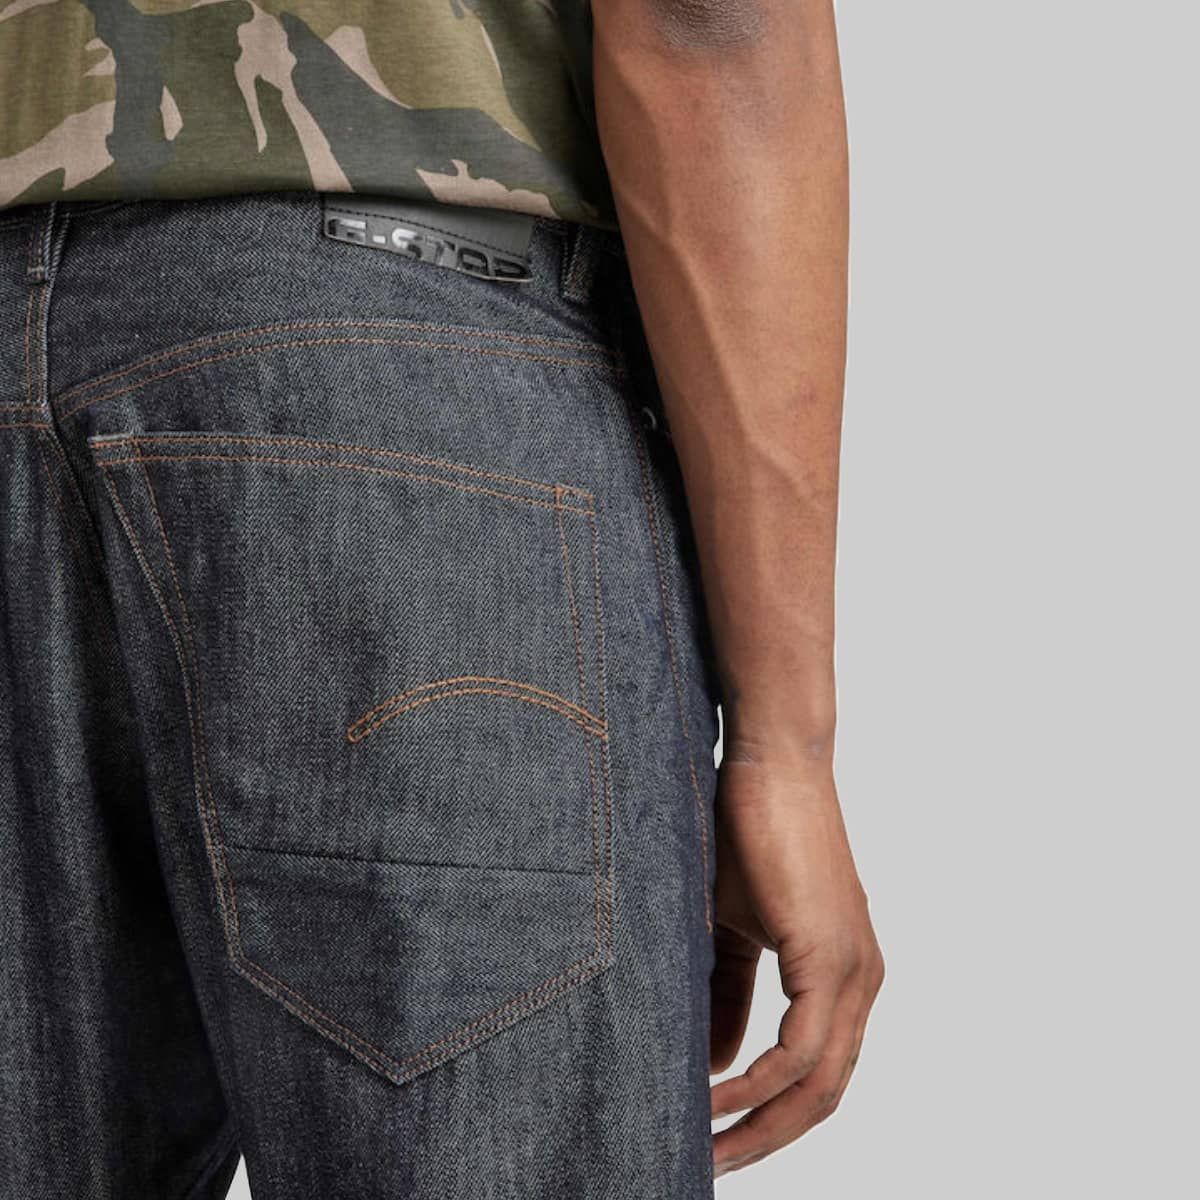 Edge Arc 3D Slim Jeans